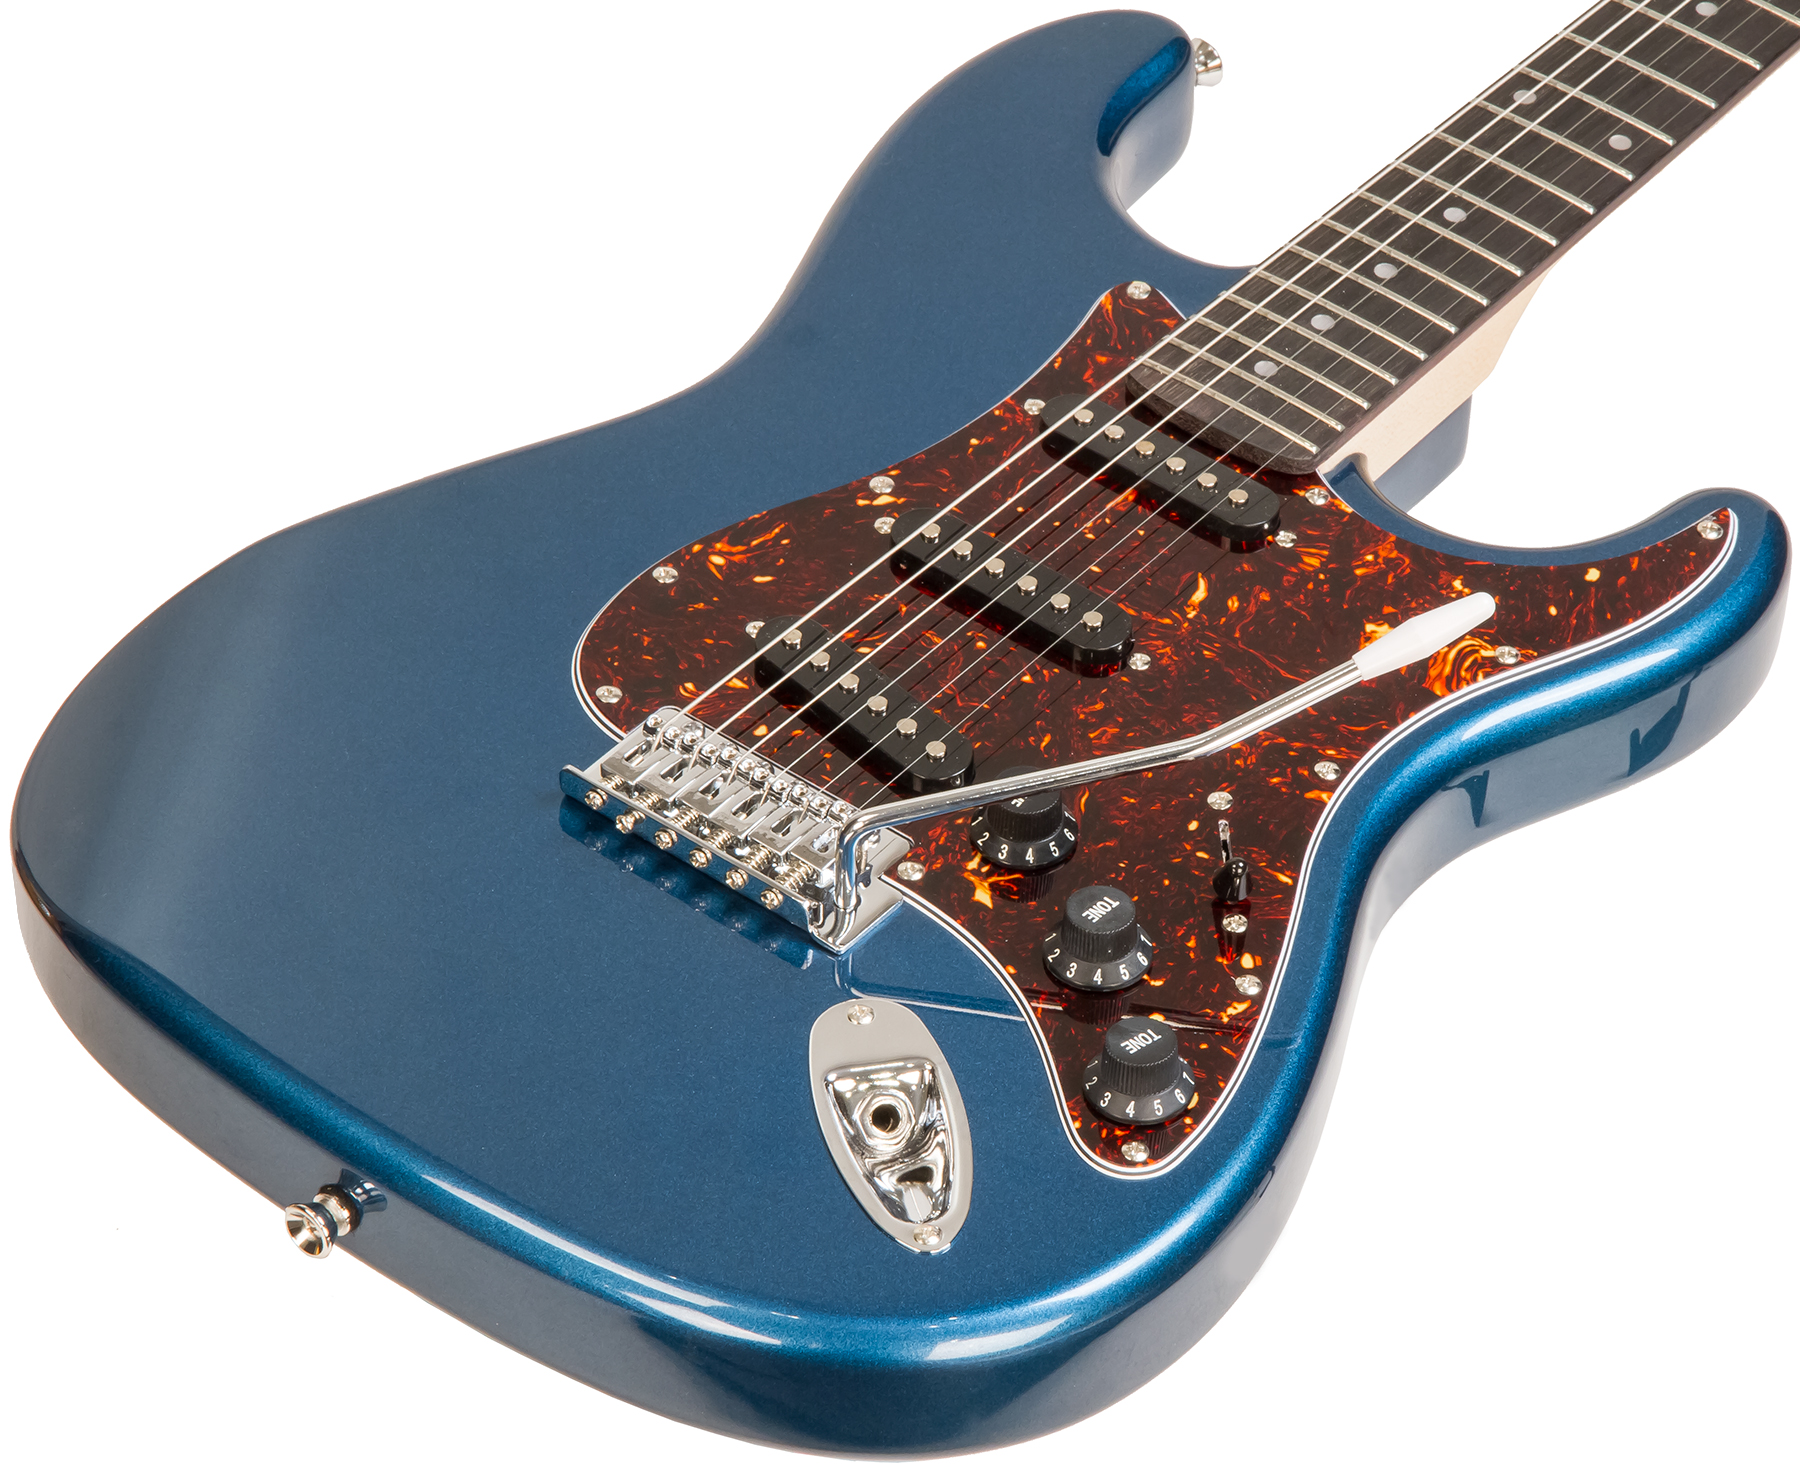 Eastone Str70t + Blackstar Id Core V3 10w +courroie +housse +cable +mediators - Lake Placid Blue - Electric guitar set - Variation 1